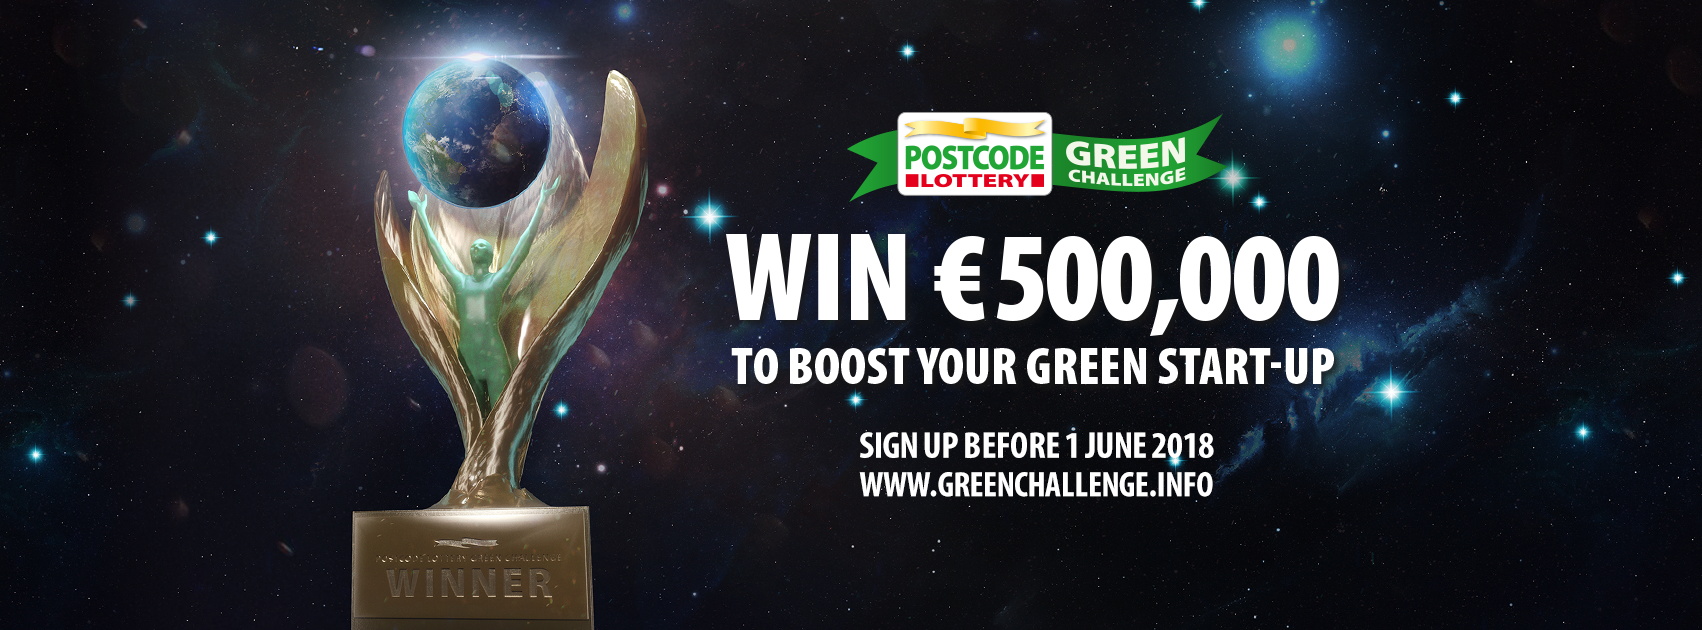 alphagamma Postcode Lottery Green Challenge 2018 opportunities